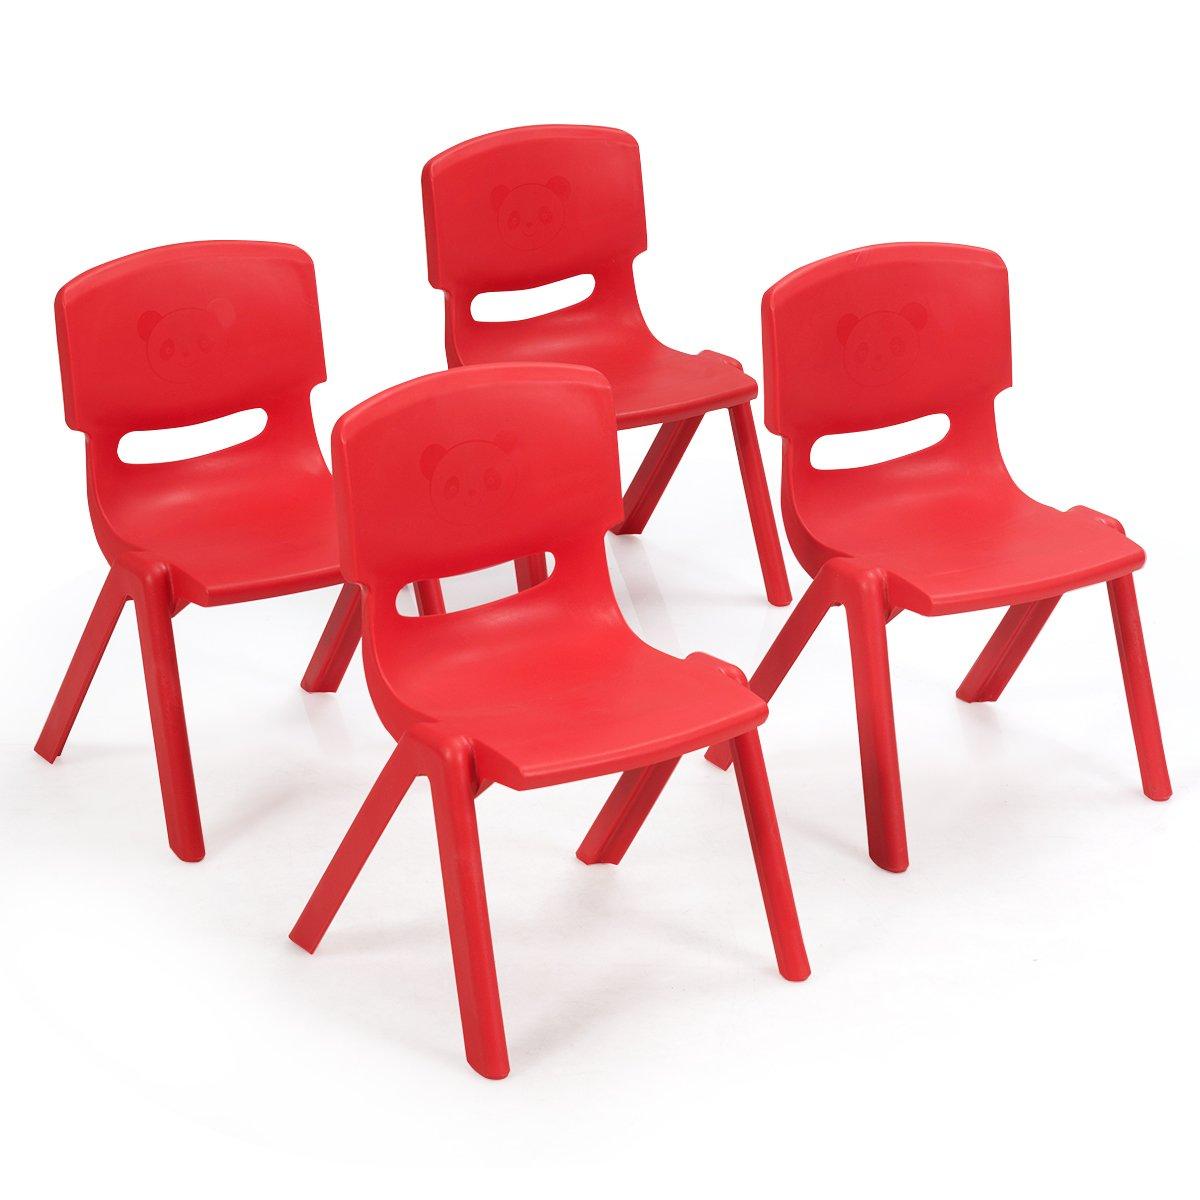 Stackable Plastic Kids Chair Children Activity Chair Portable Study Chair